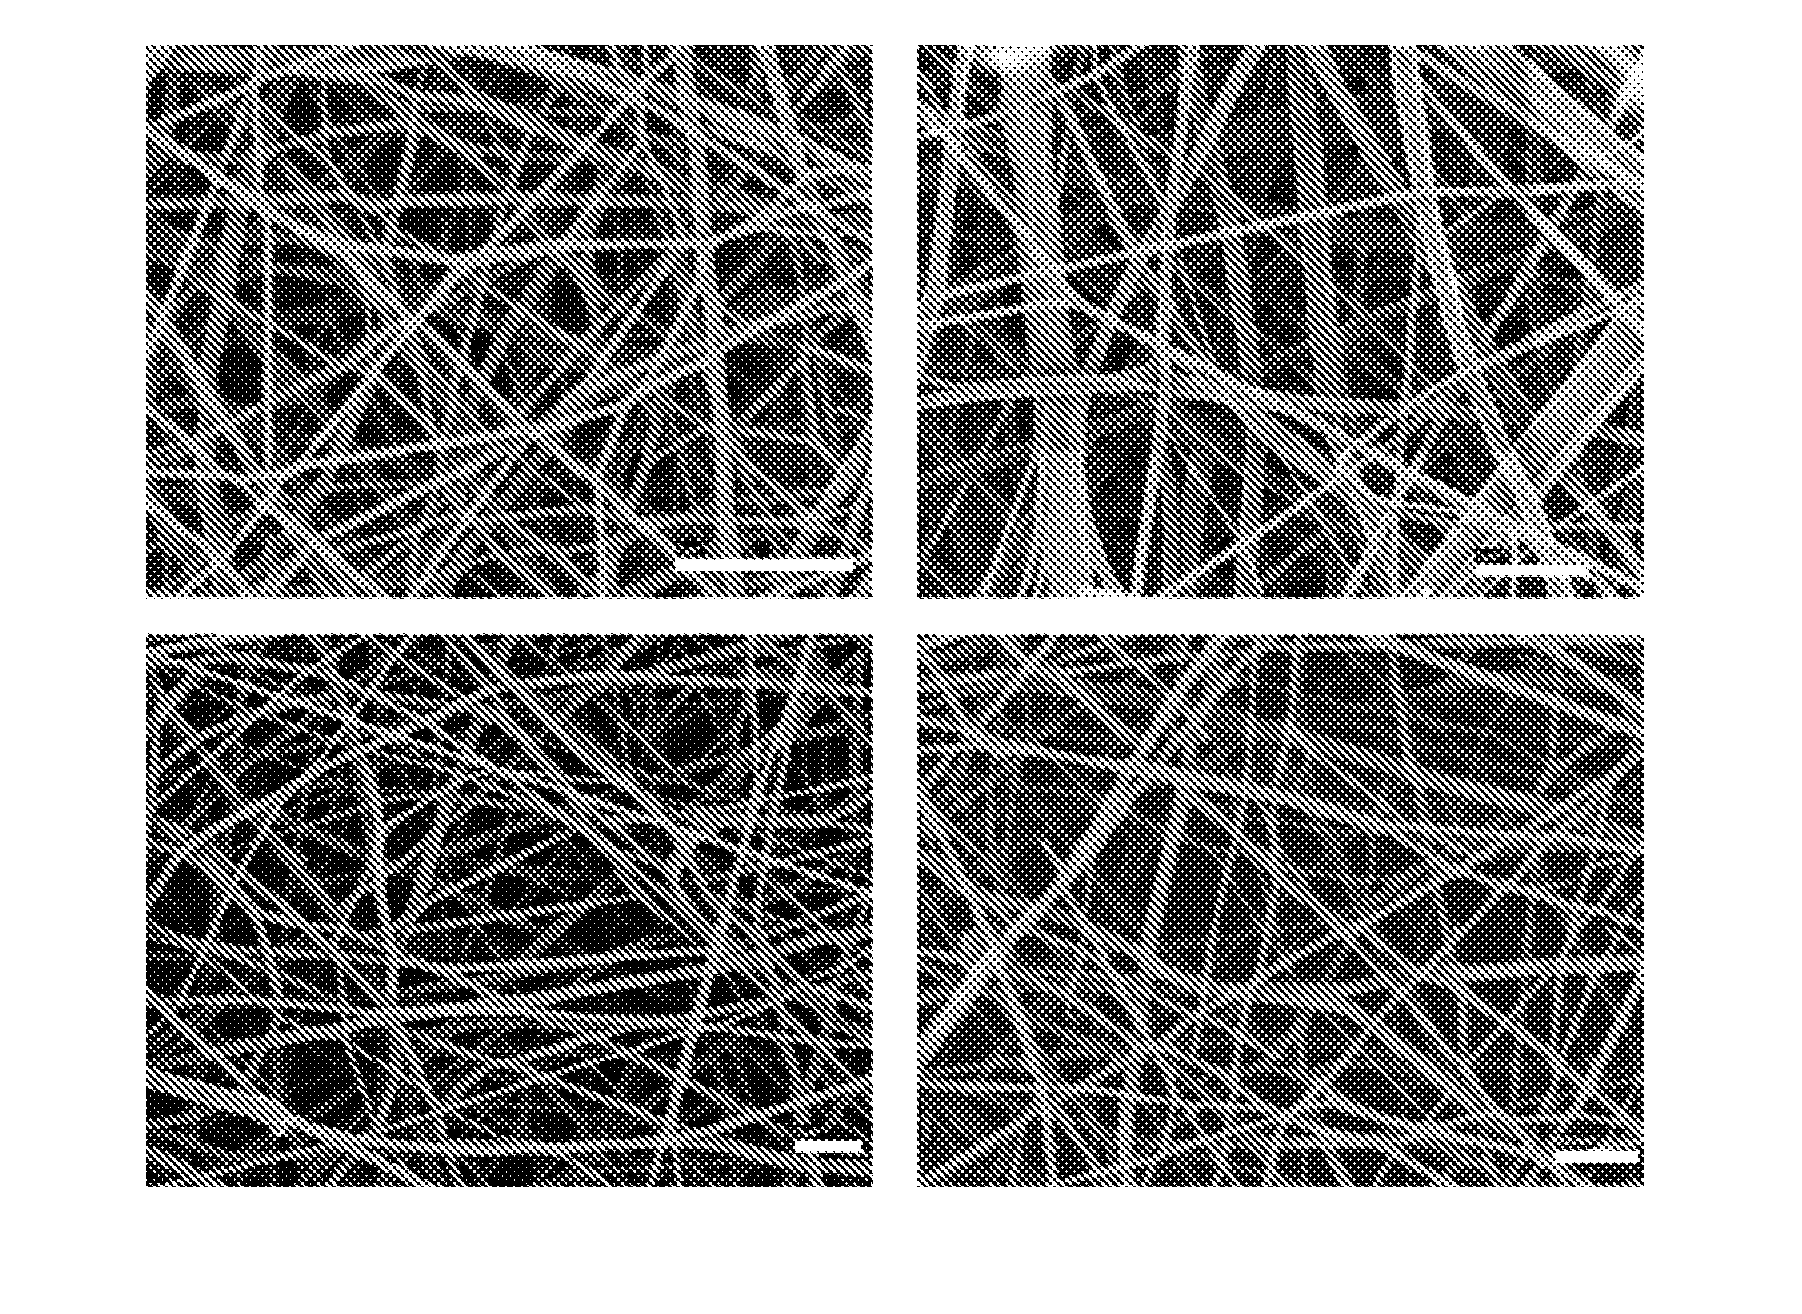 Fibrous mats containing chitosan nanofibers